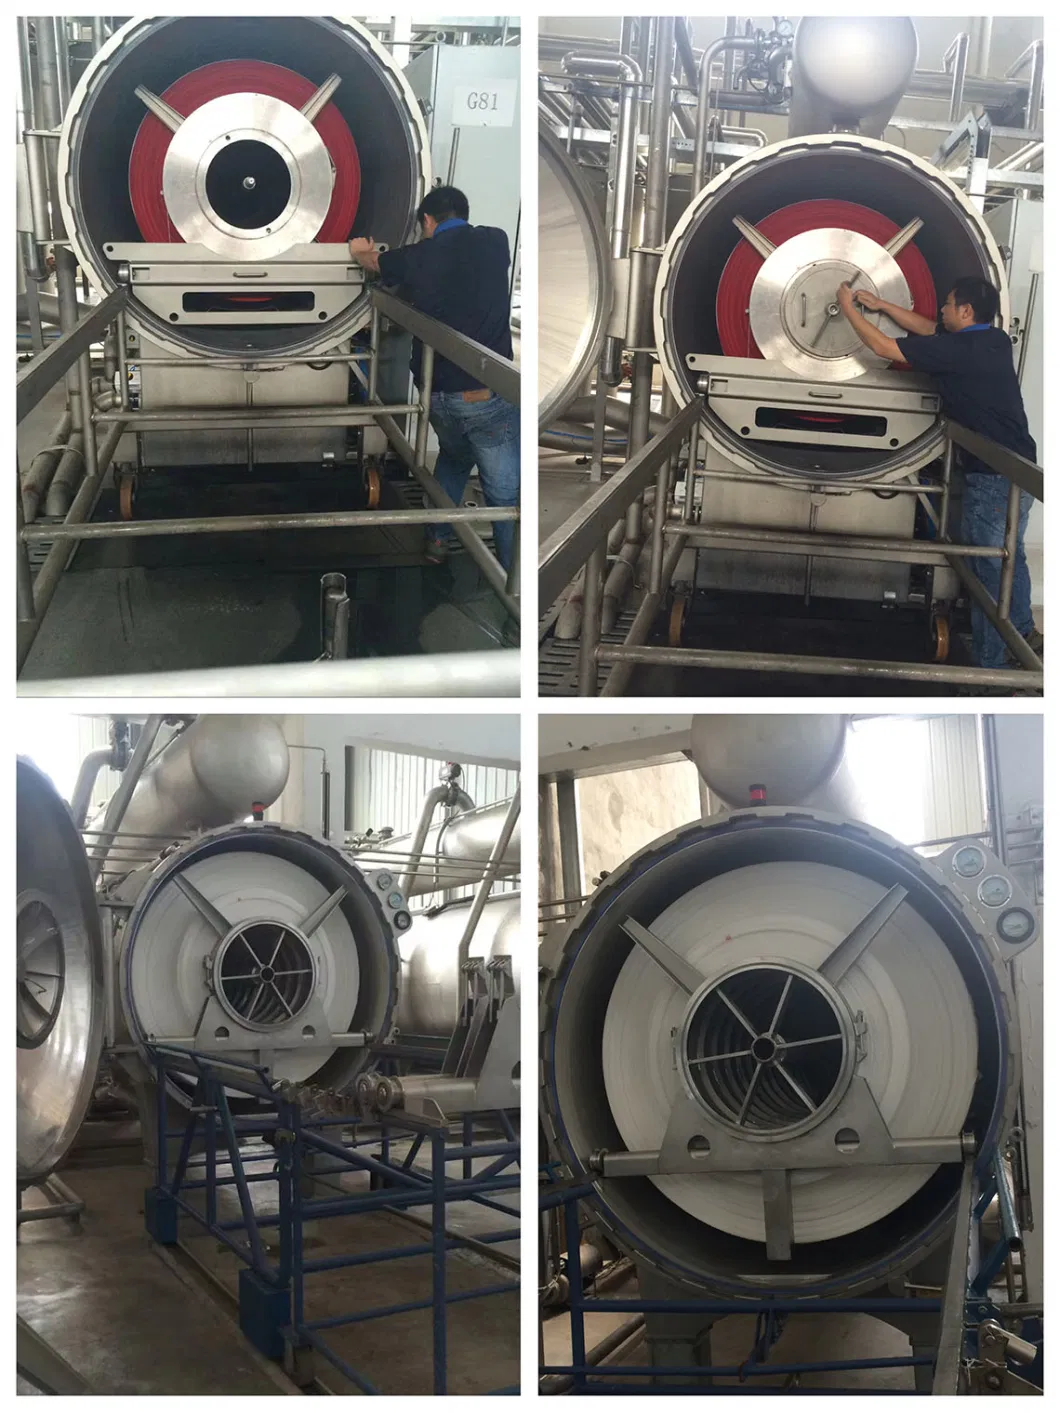 High Temperature Warp Beam Dyeing Machine Used for Filament Warp-Fabric